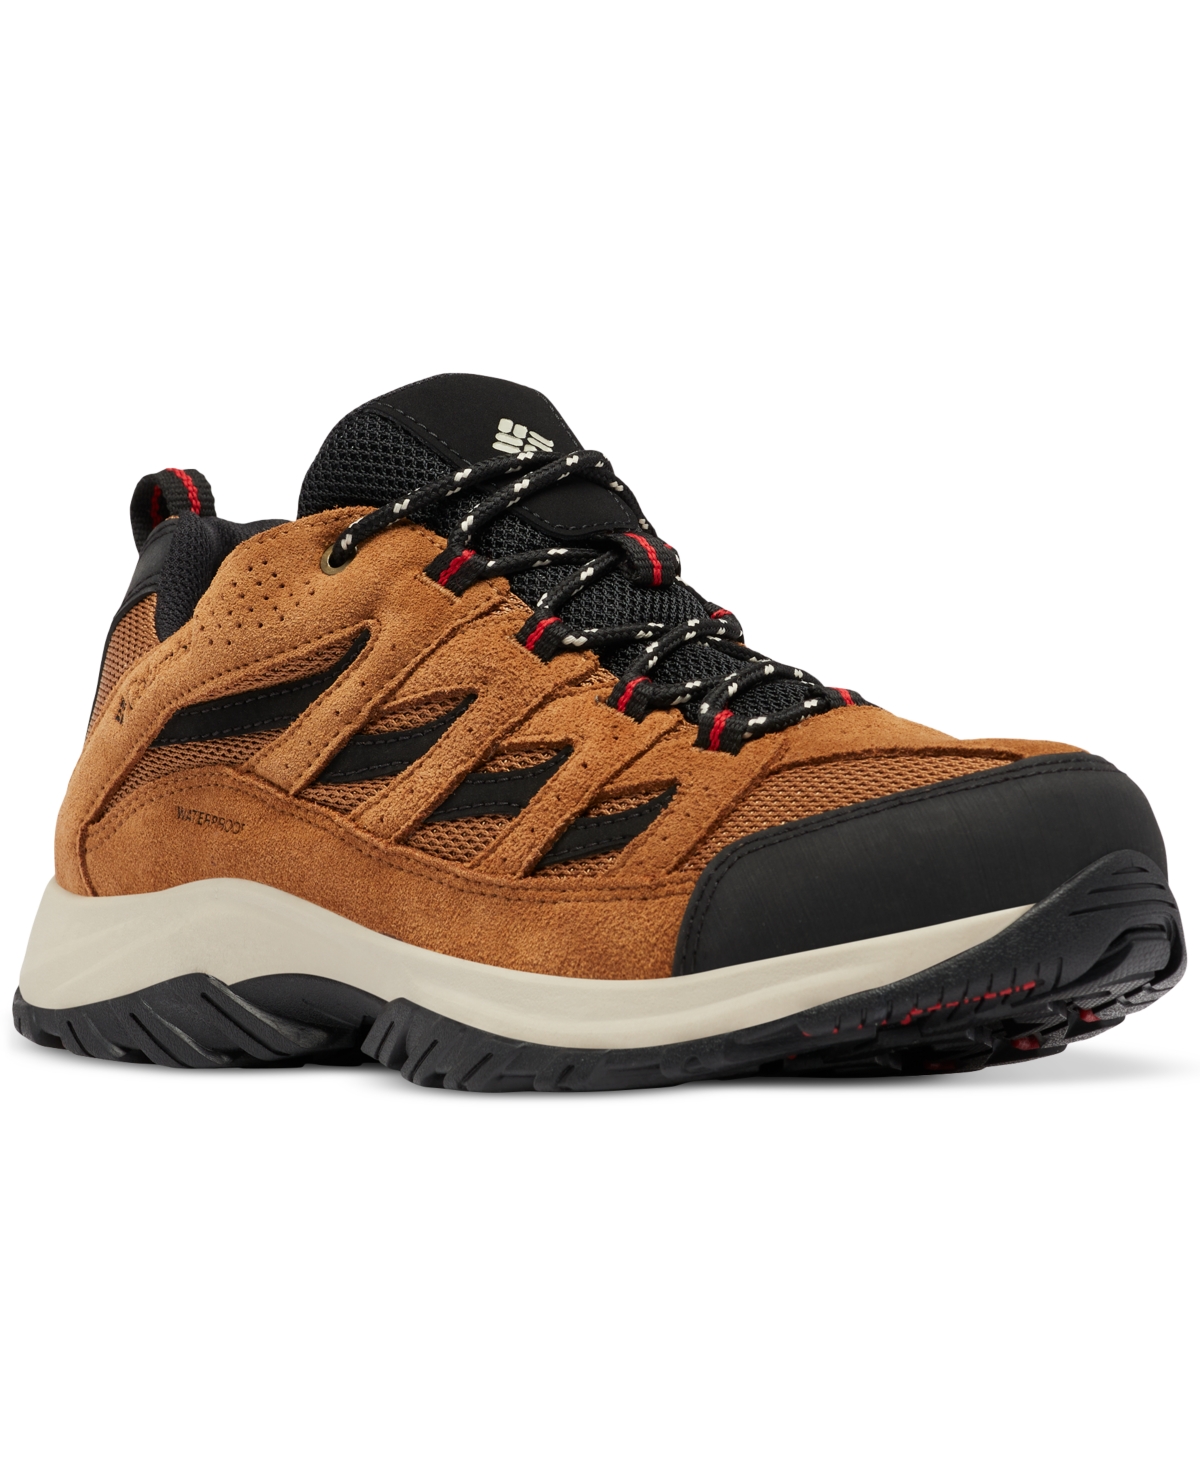 Men's Crestwood Waterproof Trail Boots - Elk, Black